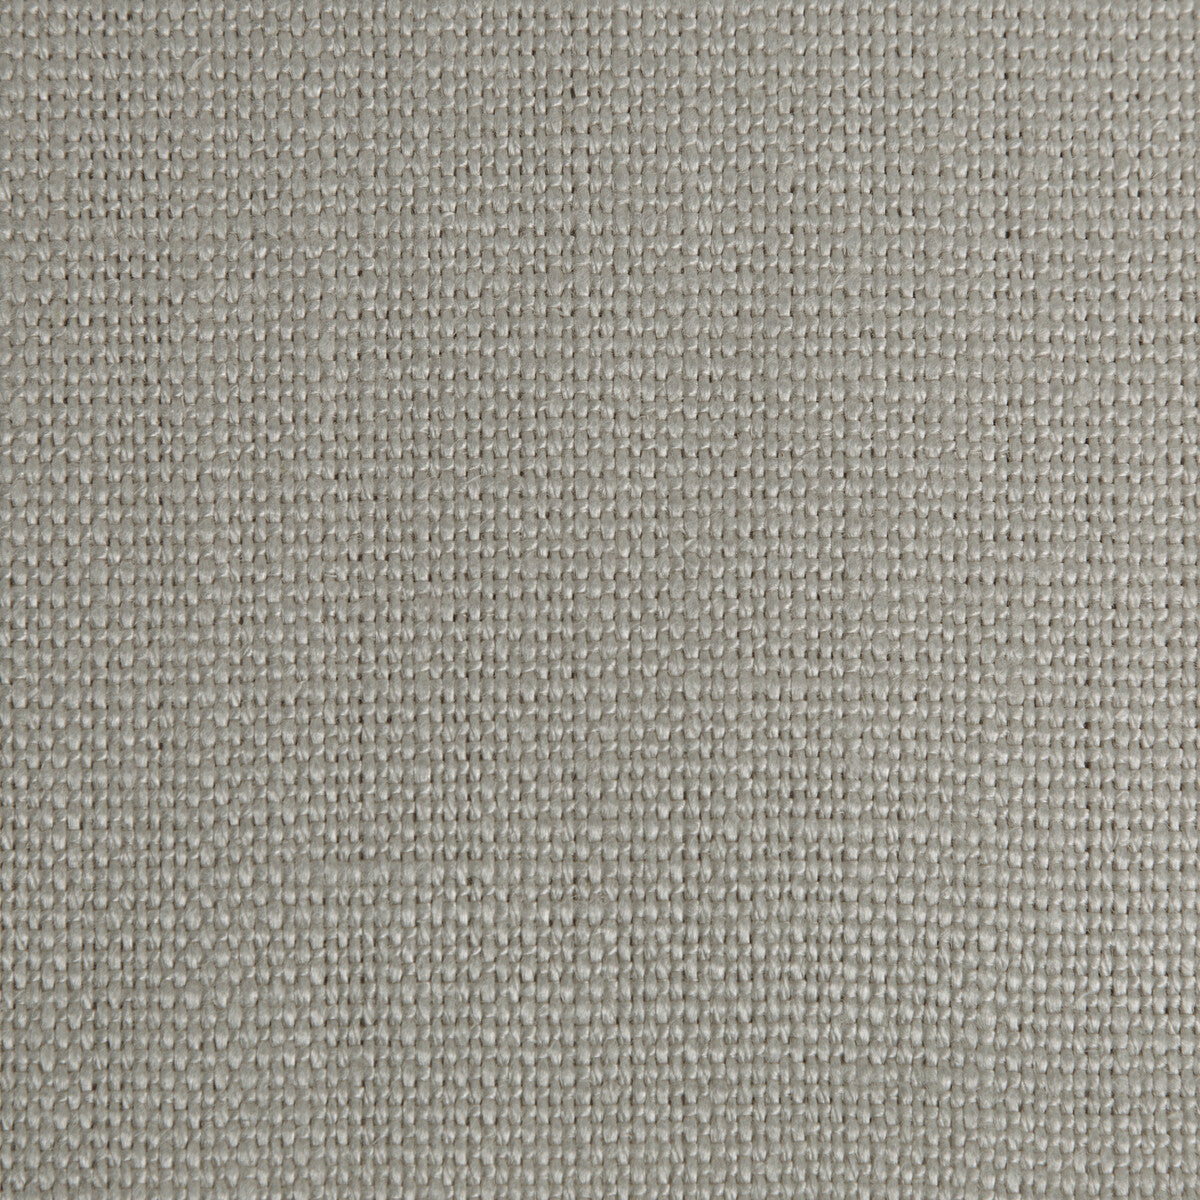 Stone Harbor fabric in sterling color - pattern 27591.2111.0 - by Kravet Basics